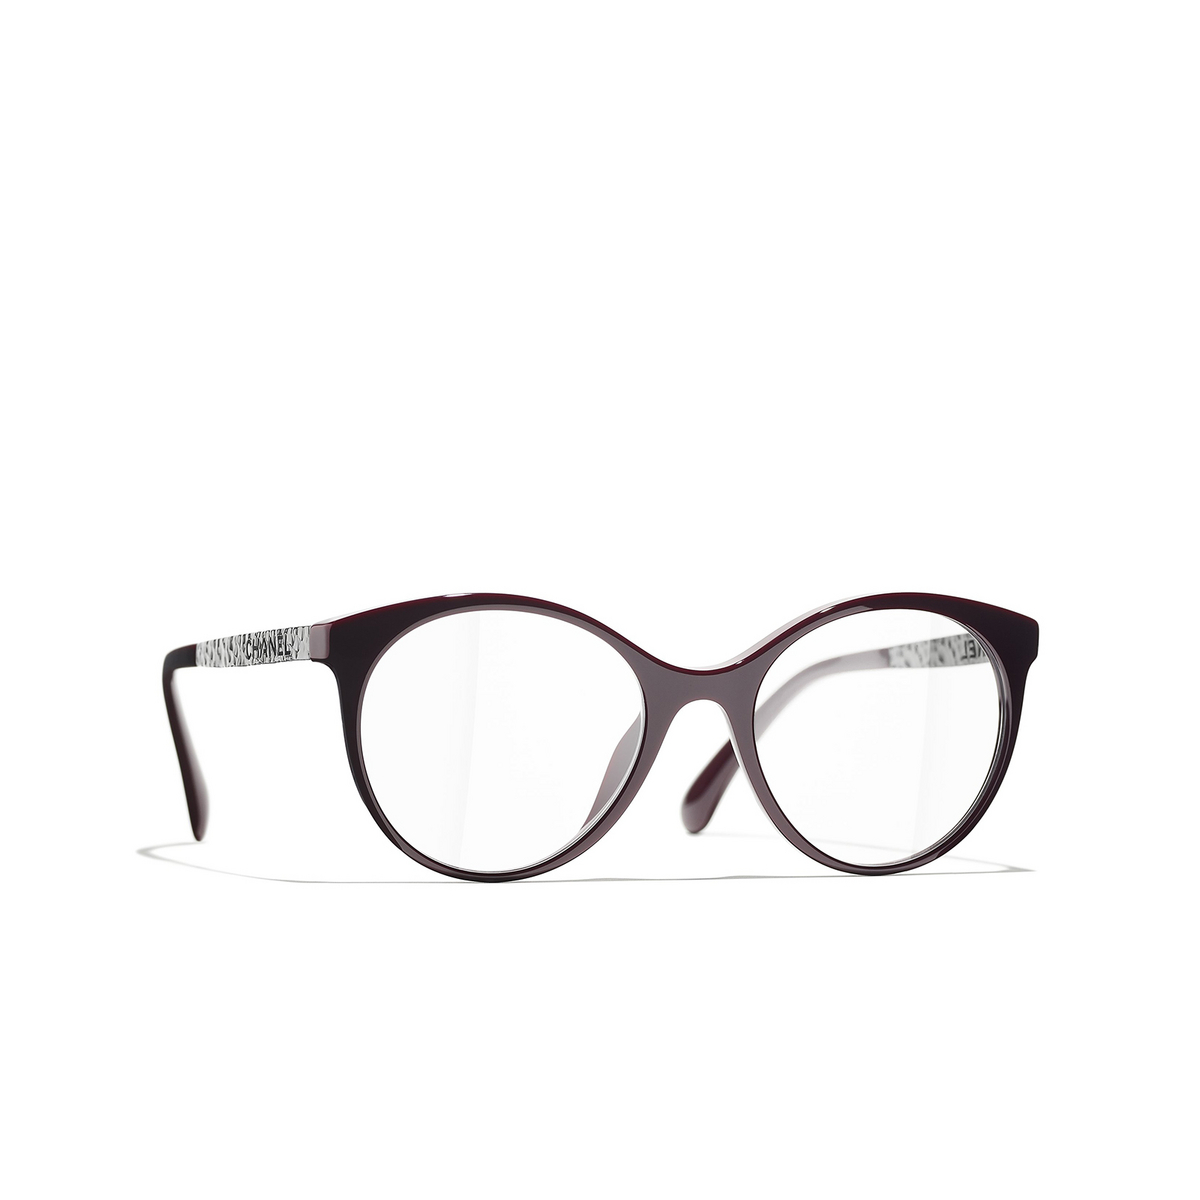 CHANEL pantos Eyeglasses 1448 Red & Dark Silver